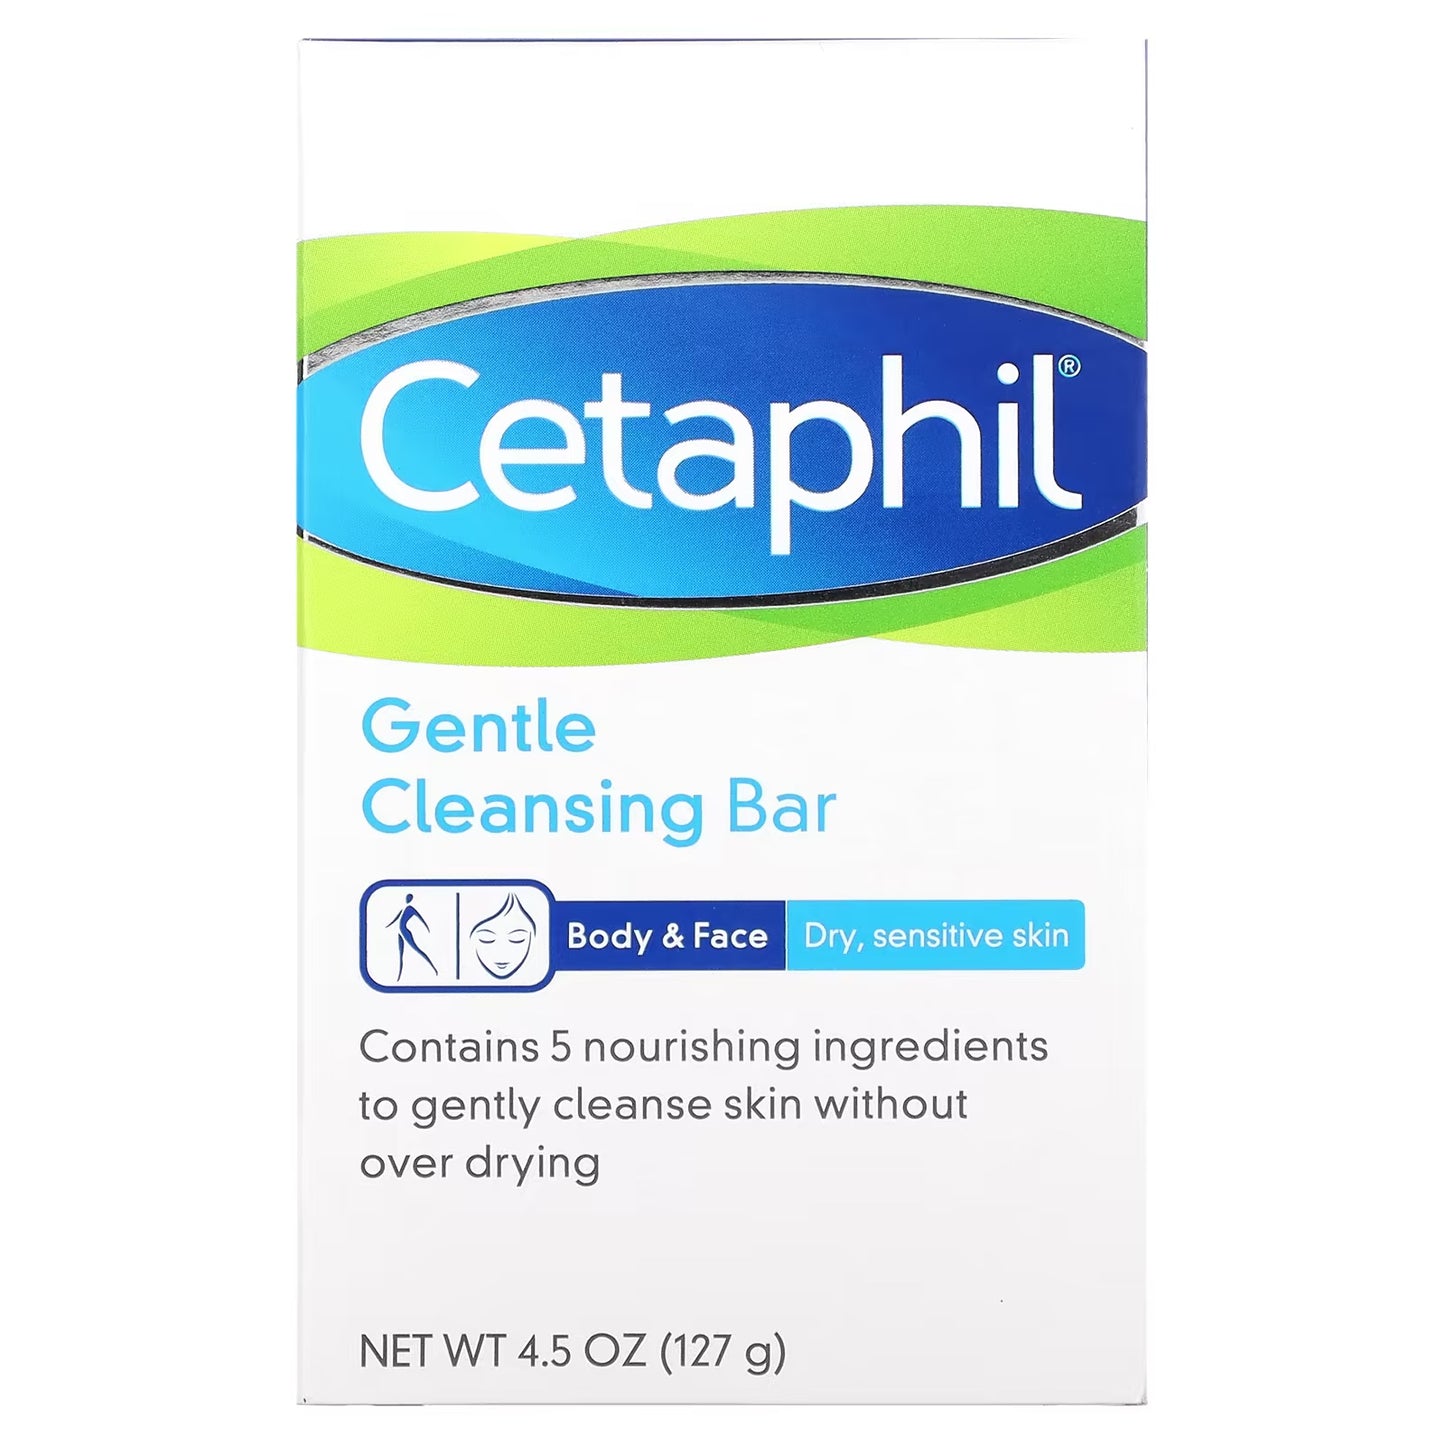 Cetaphil GENTEL CLEANSING BAR 127g